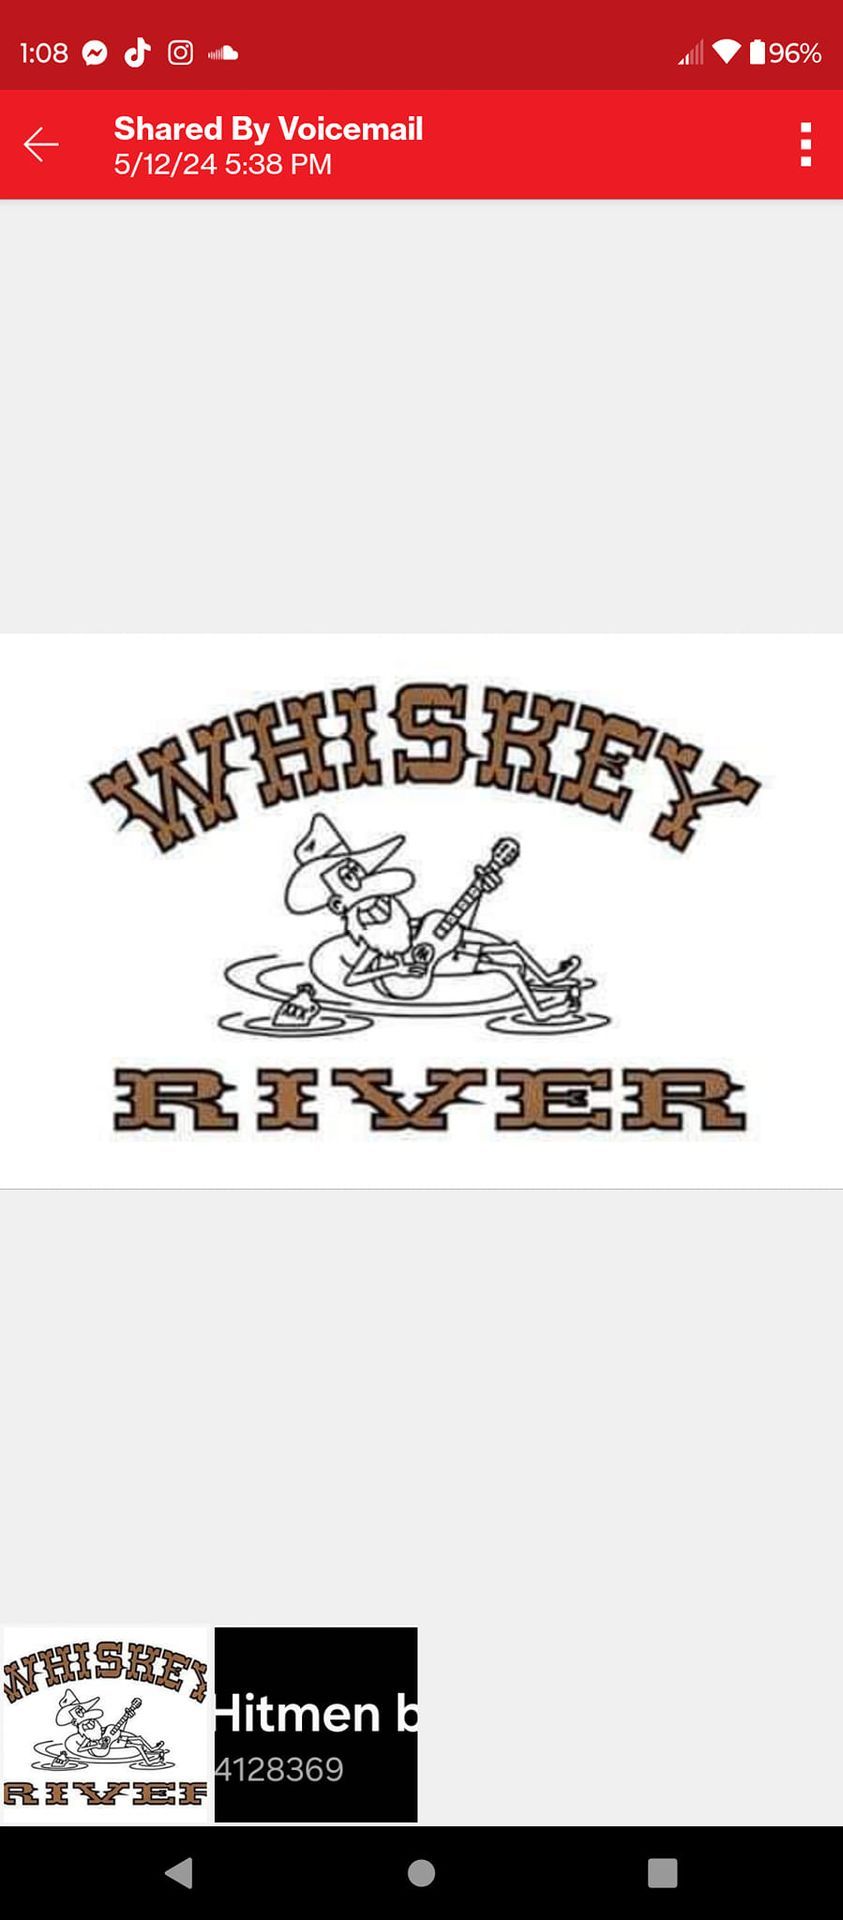 Whiskey River @ Rosie and irl's smokehouse bbq 1st anniversary bash!